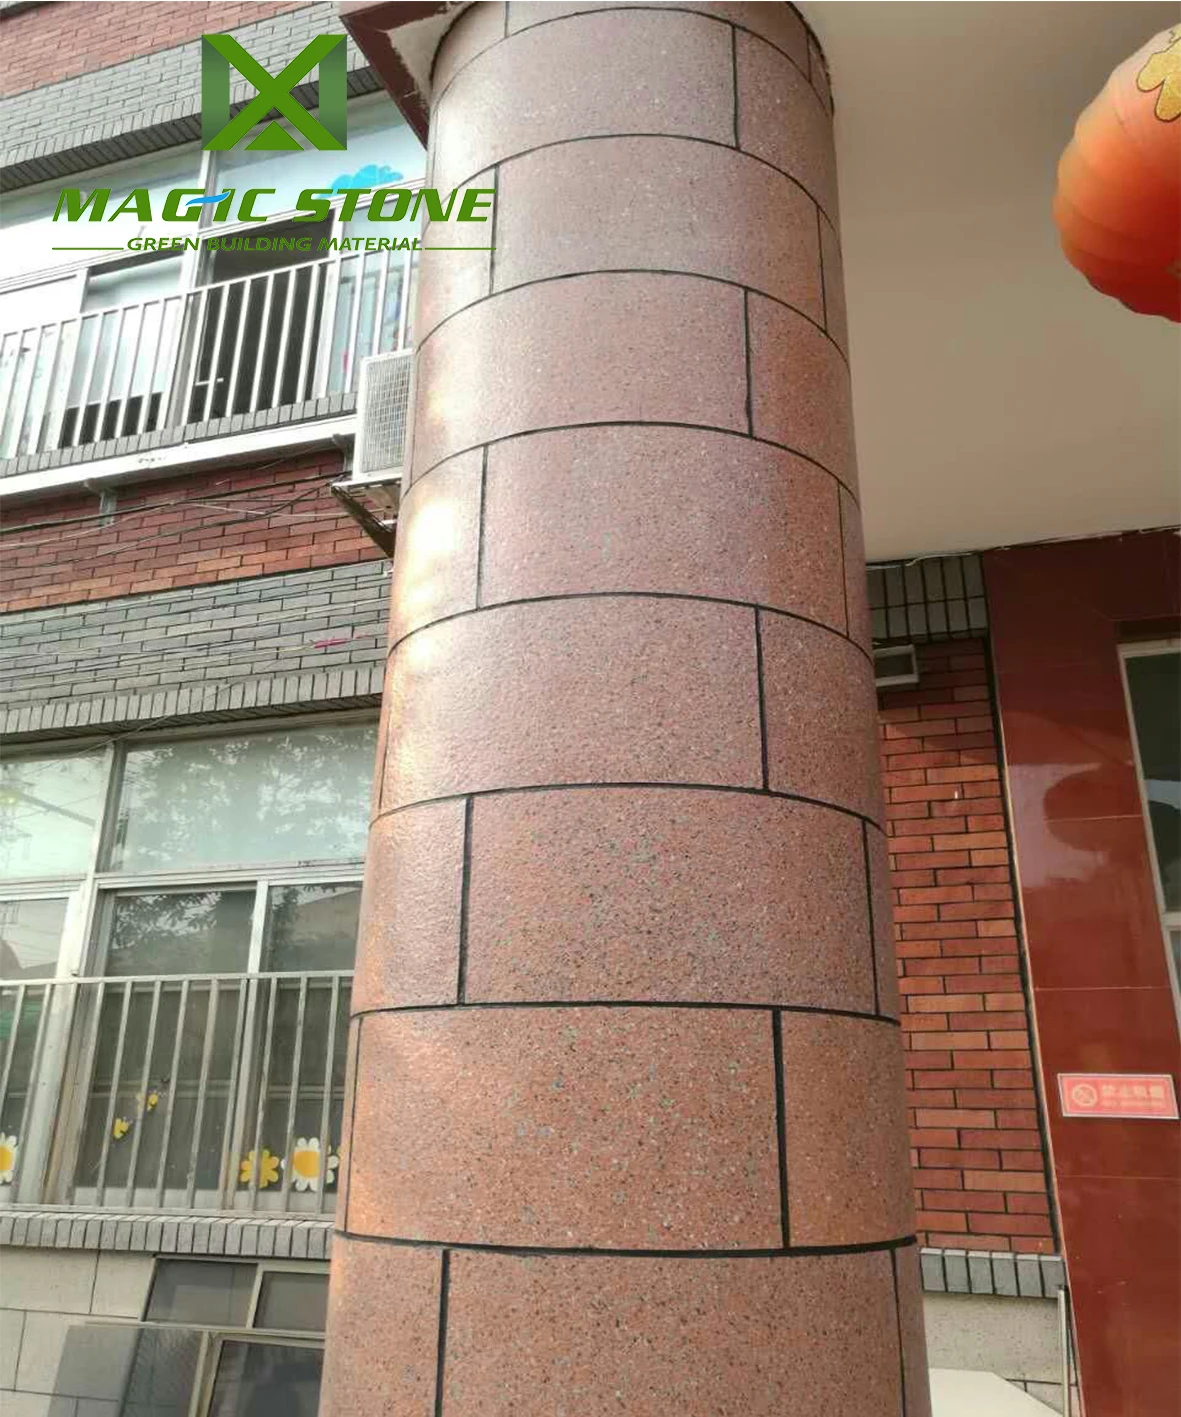 MG808 Natural Stone Anti-aging Granite Stone Exterior Interior Wall Tile Flooring